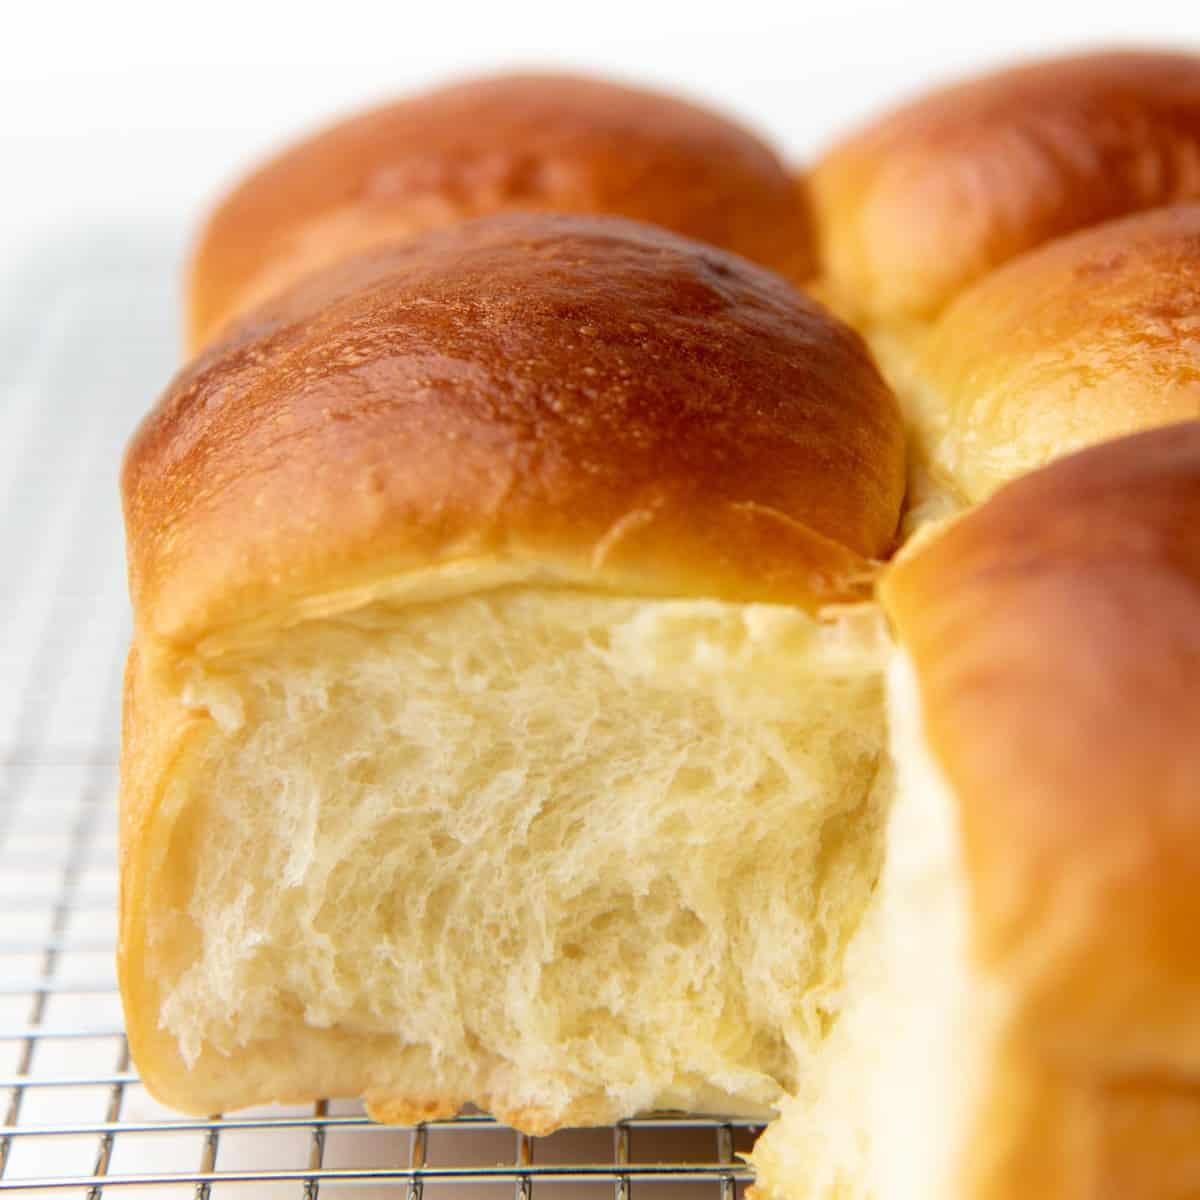 Japanese Milk Bread Recipe (Hokkaido milk bread) - The Flavor Bender